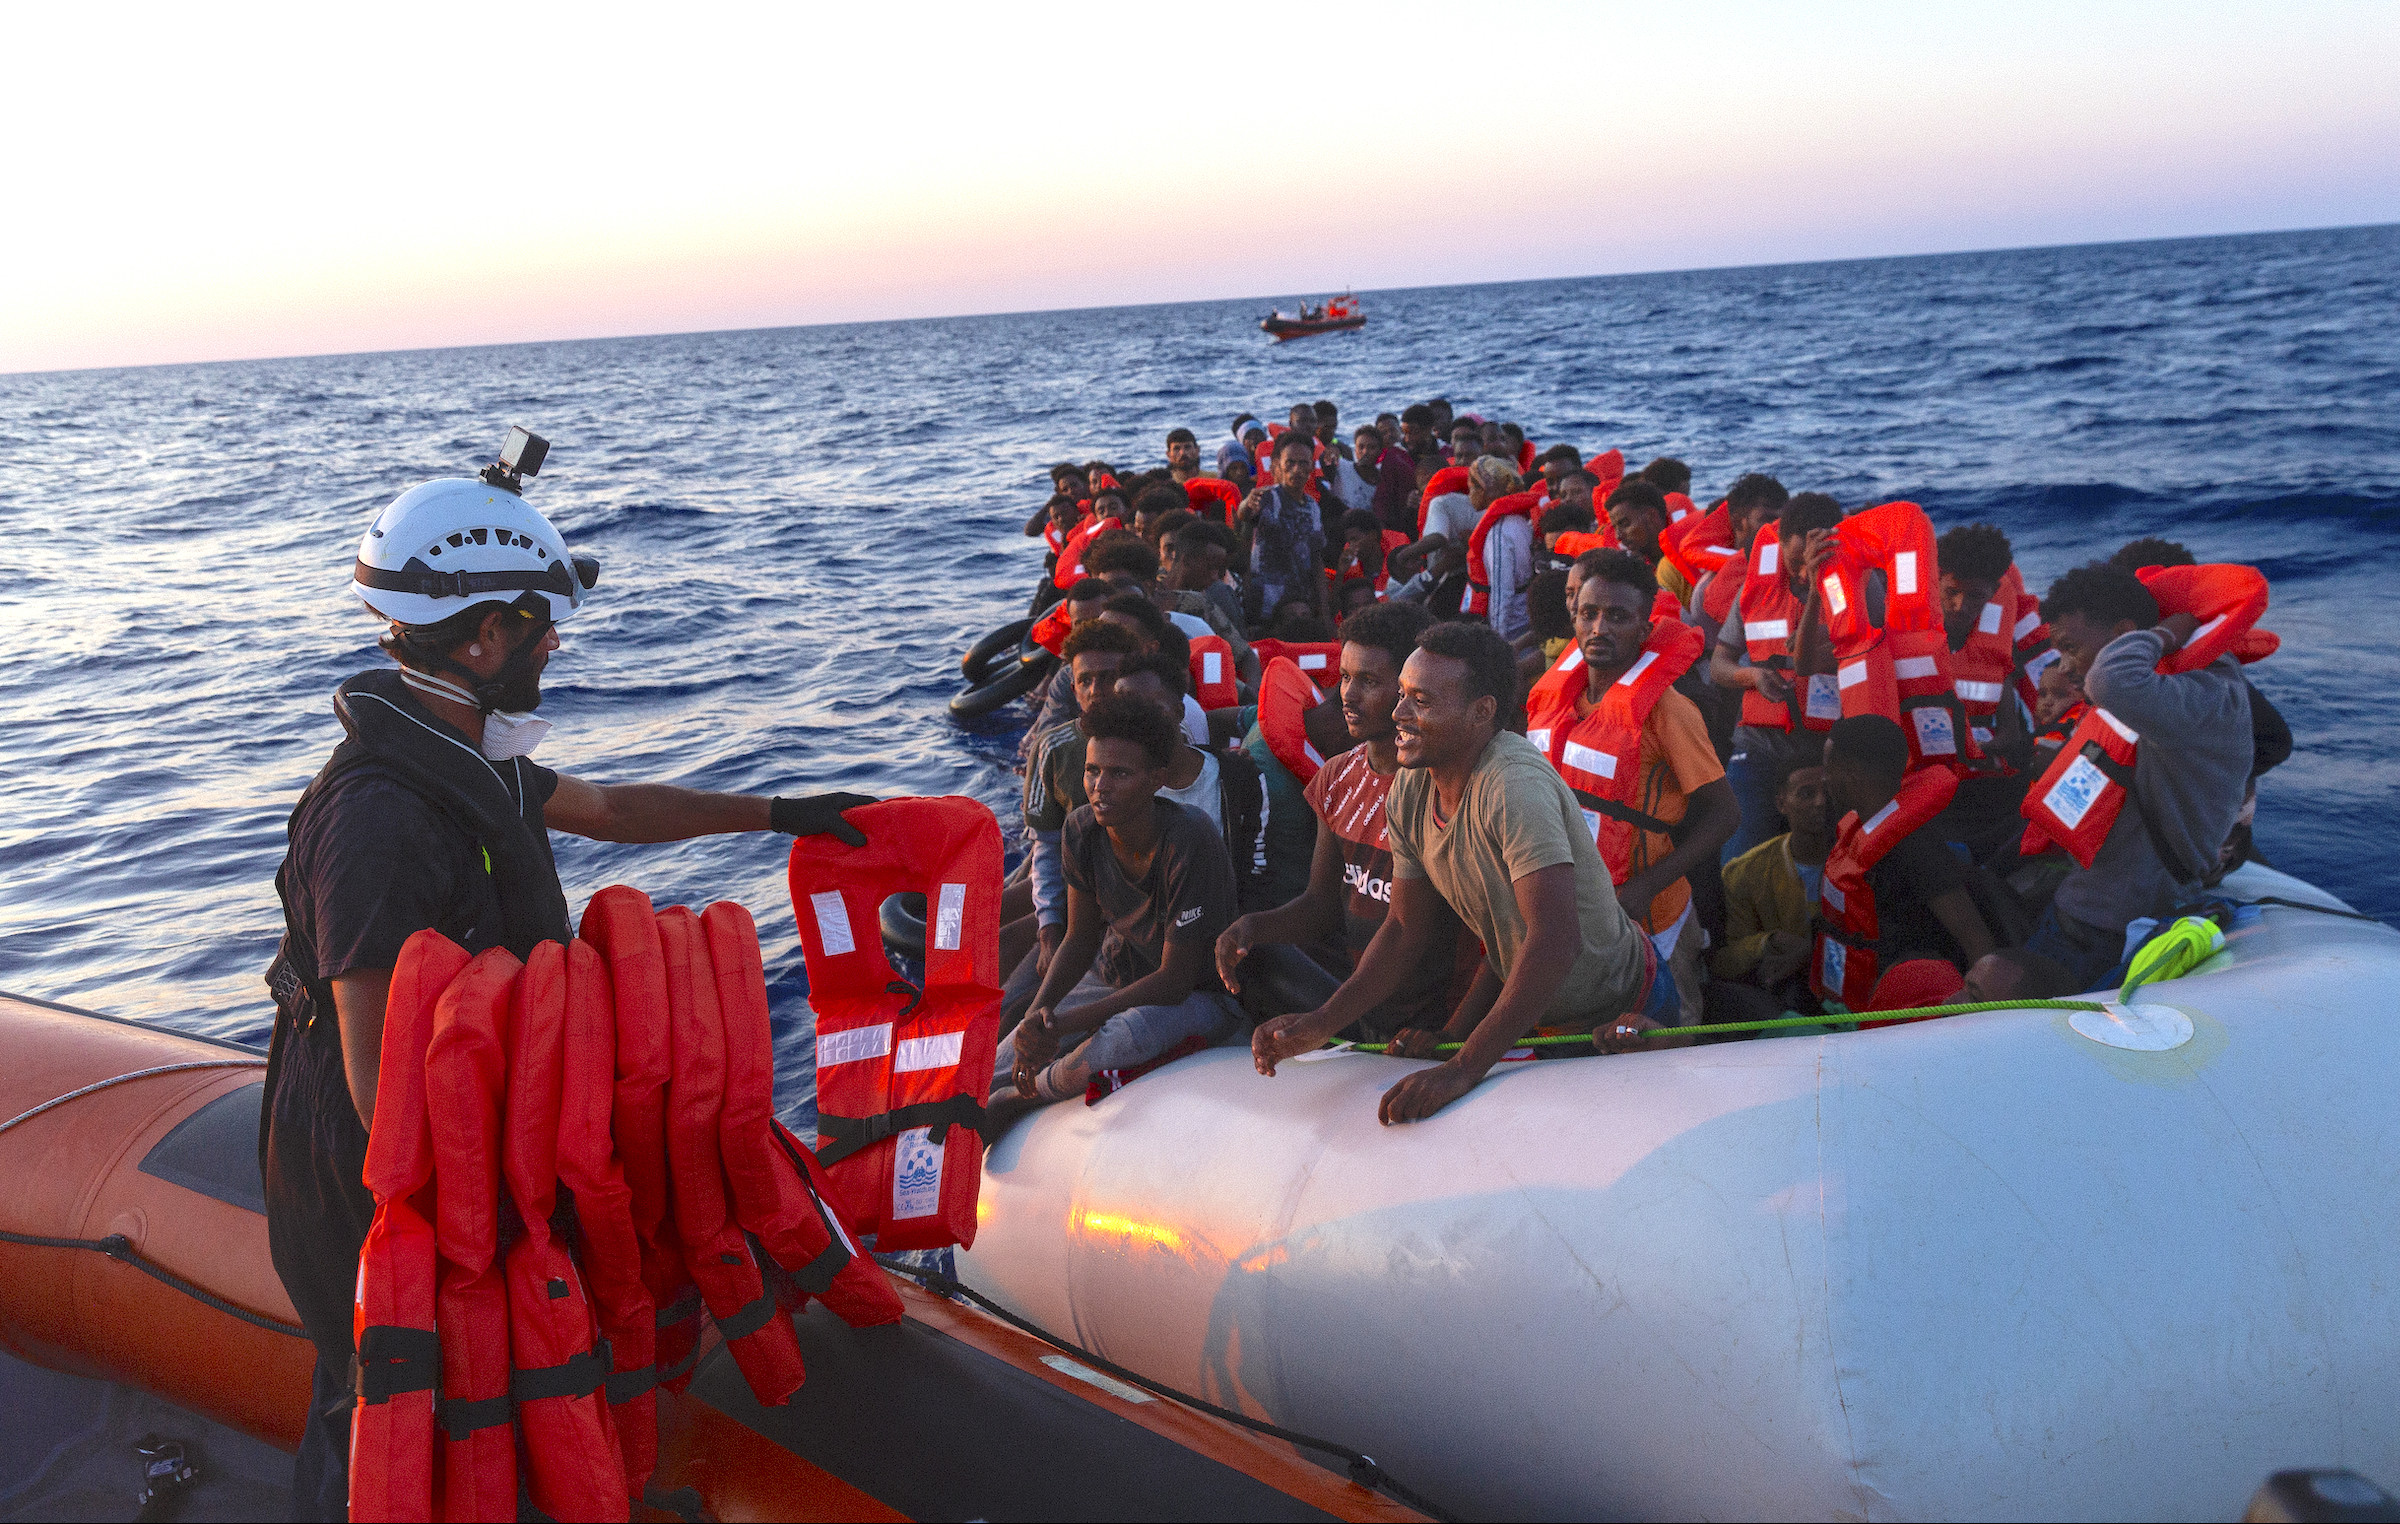 dumb laws and victimless crimes - boat people mediterranea - ..